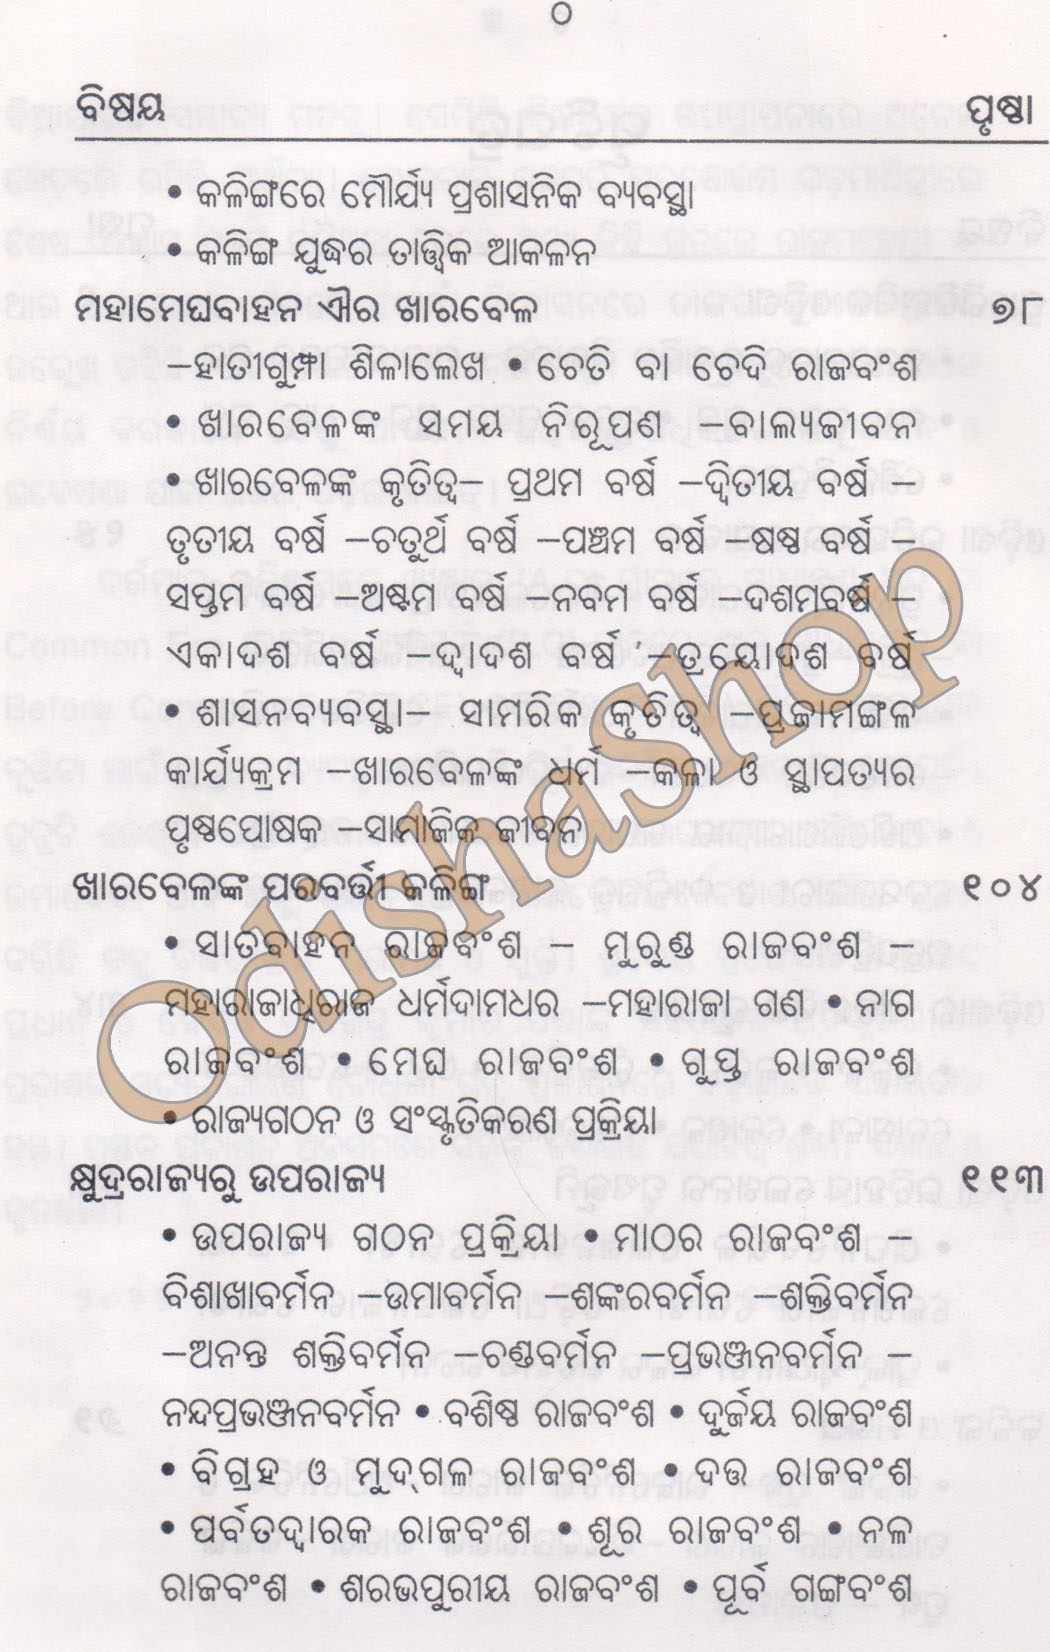 Odia spiritual book Odisha IthihasaFrom Odishashop 16 (1)